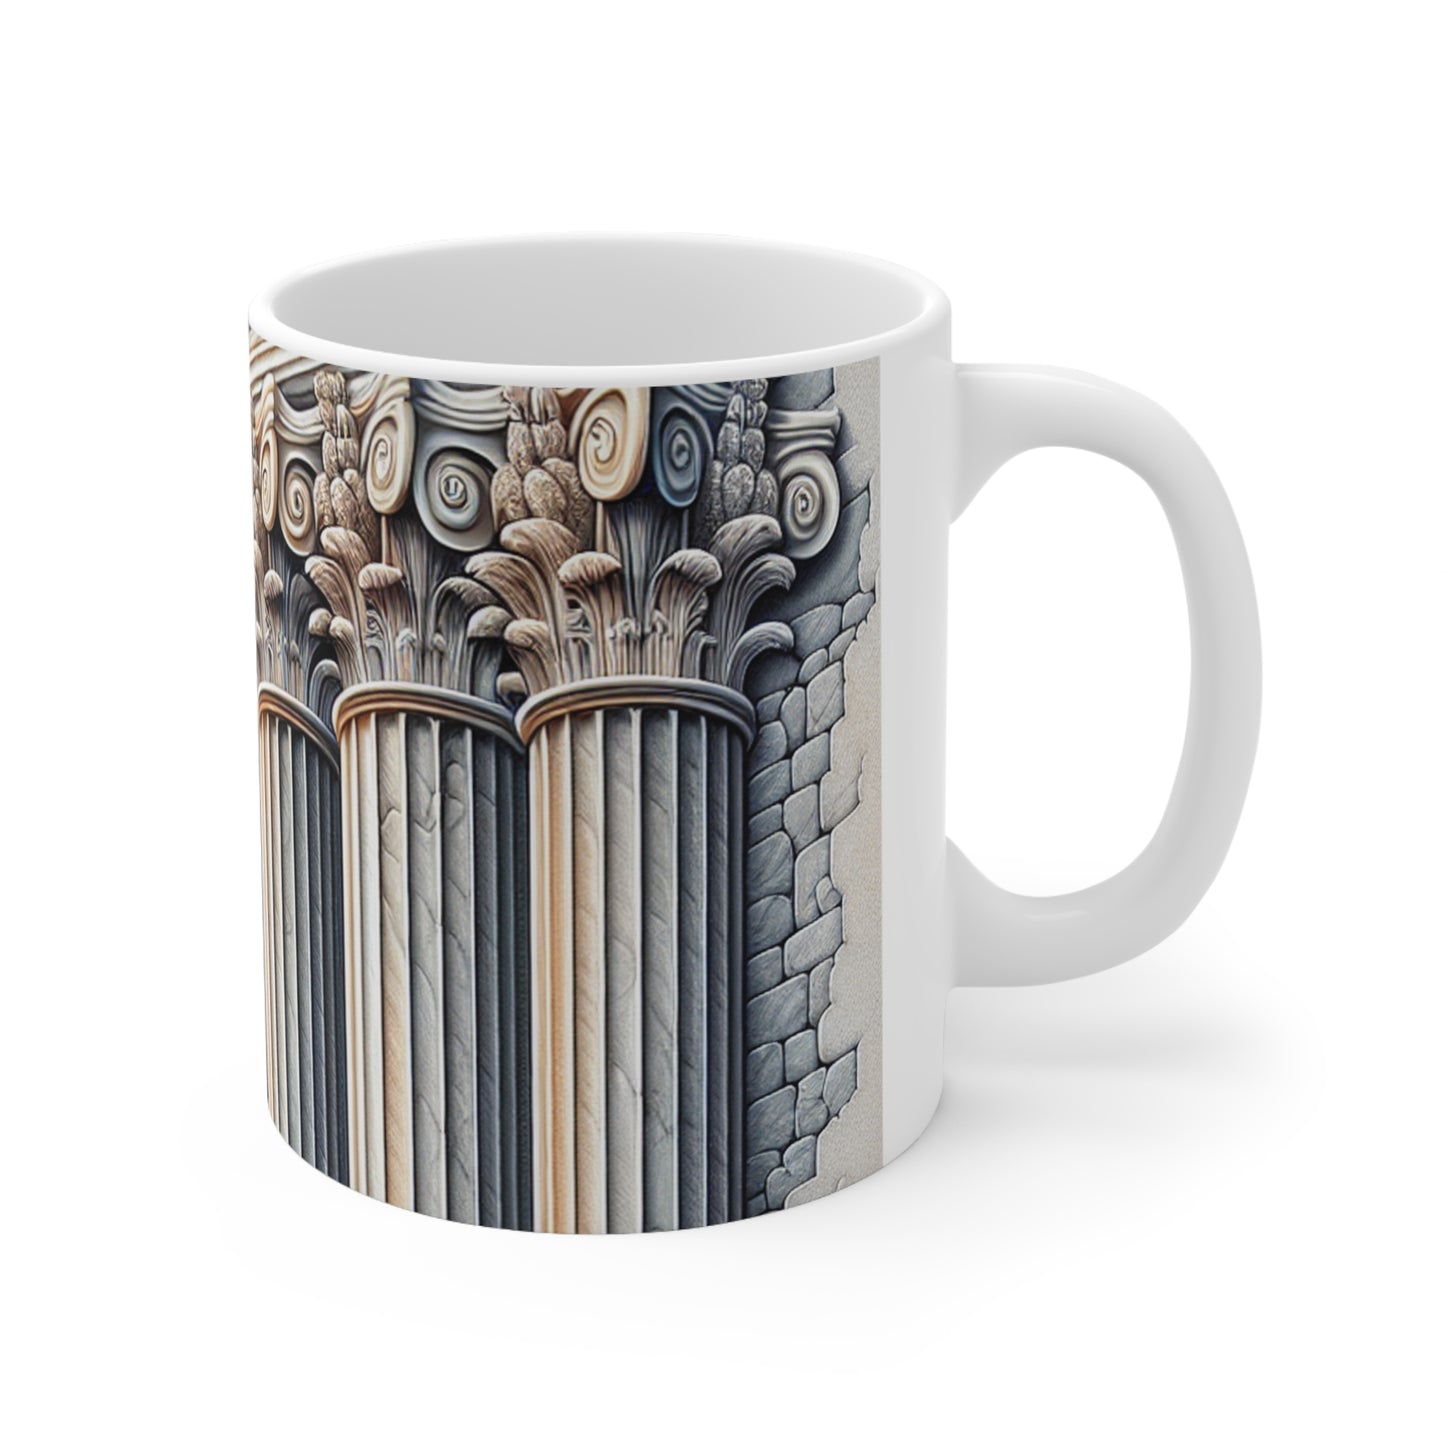 "3D Wall Columns: An Architectural Artpiece" - The Alien Ceramic Mug 11oz Trompe-l'oeil Style